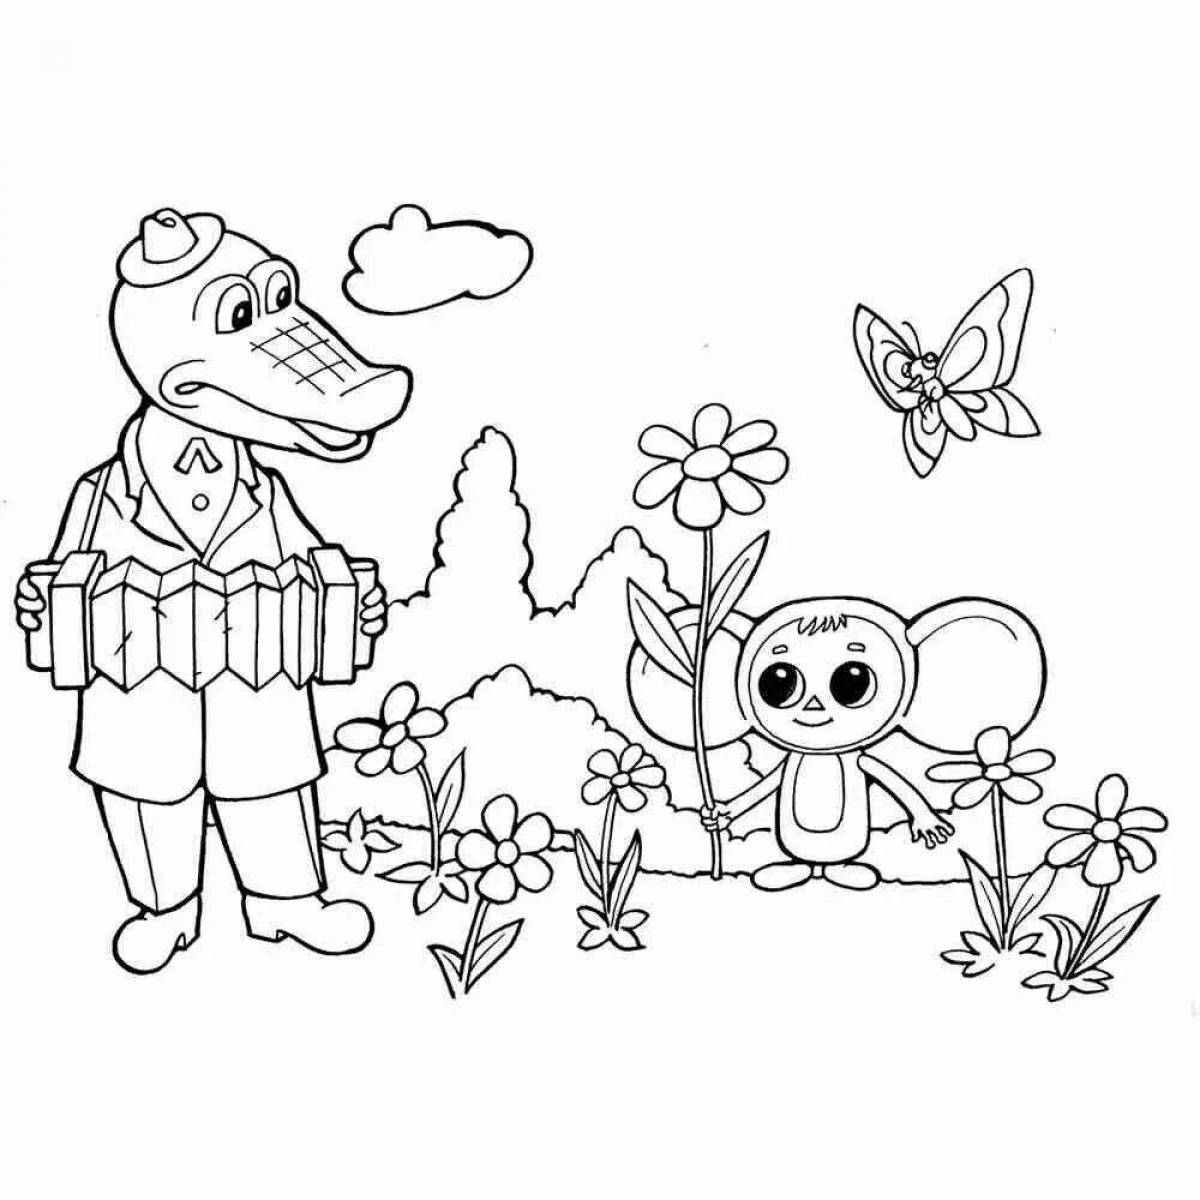 Fun coloring Cheburashka for children 6-7 years old